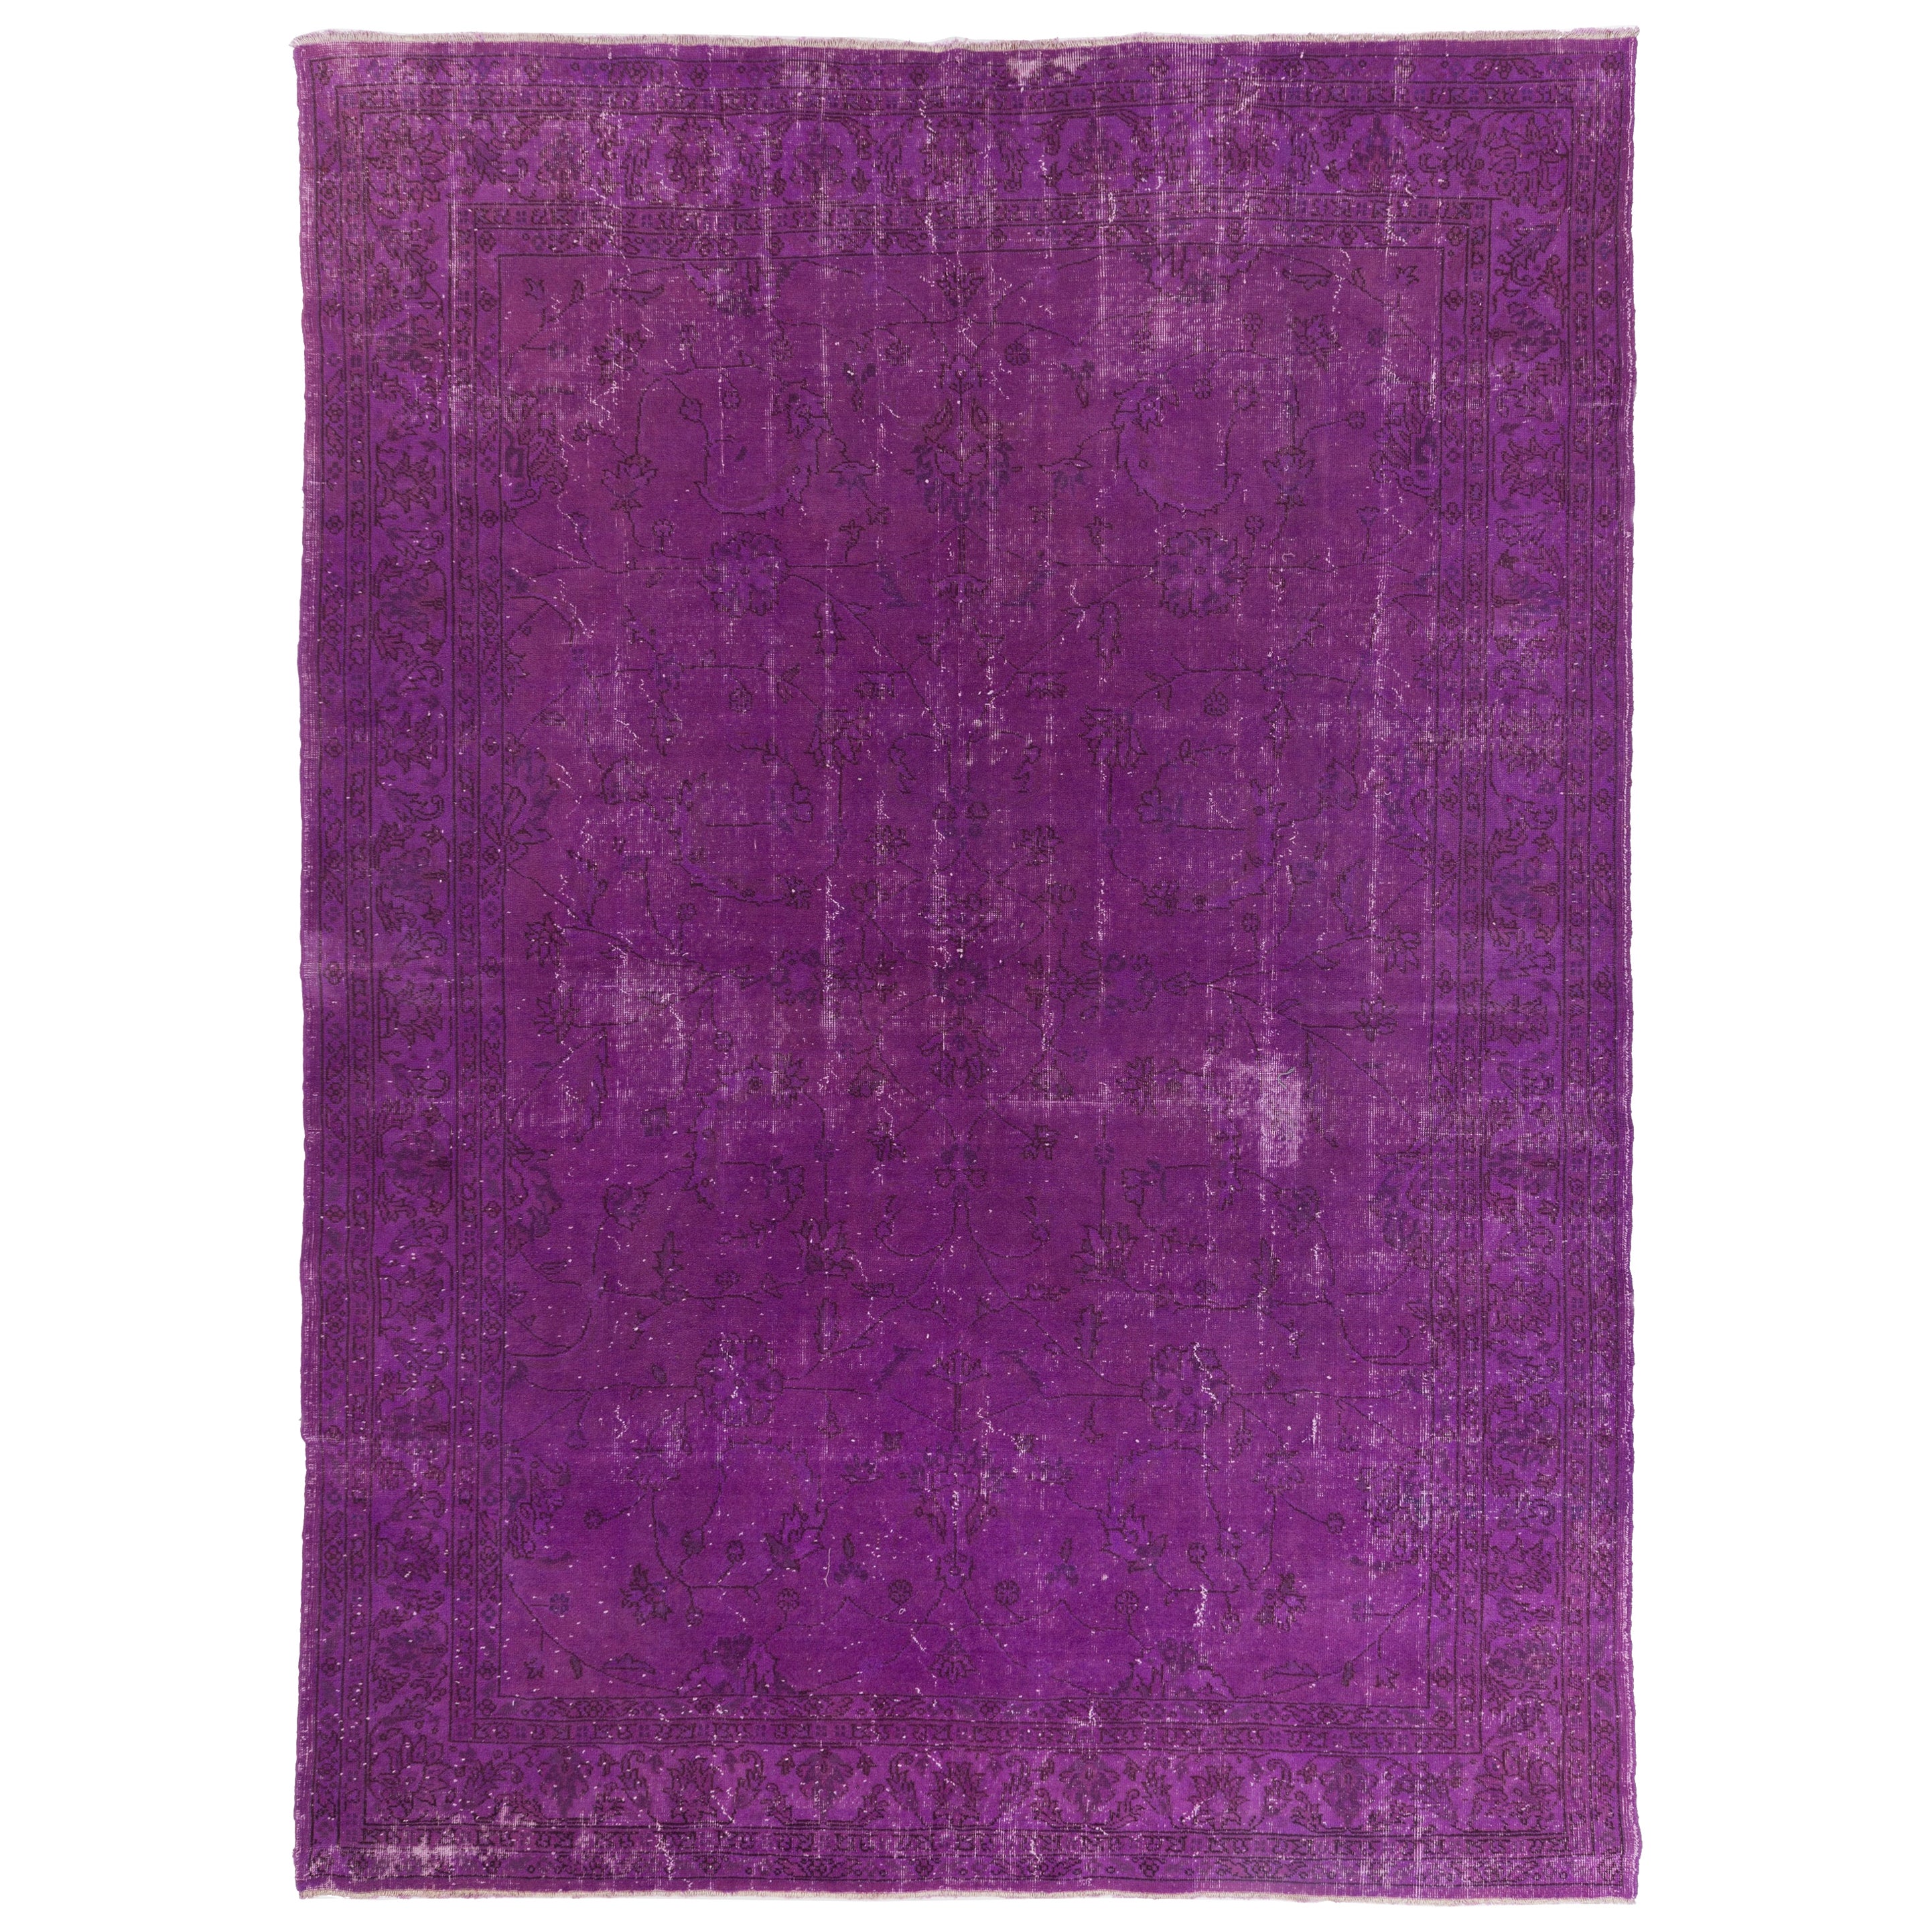 8.2x11.5 Ft Purple Large Area Rug, Handmade in Turkiye, Modern Floral Carpet For Sale